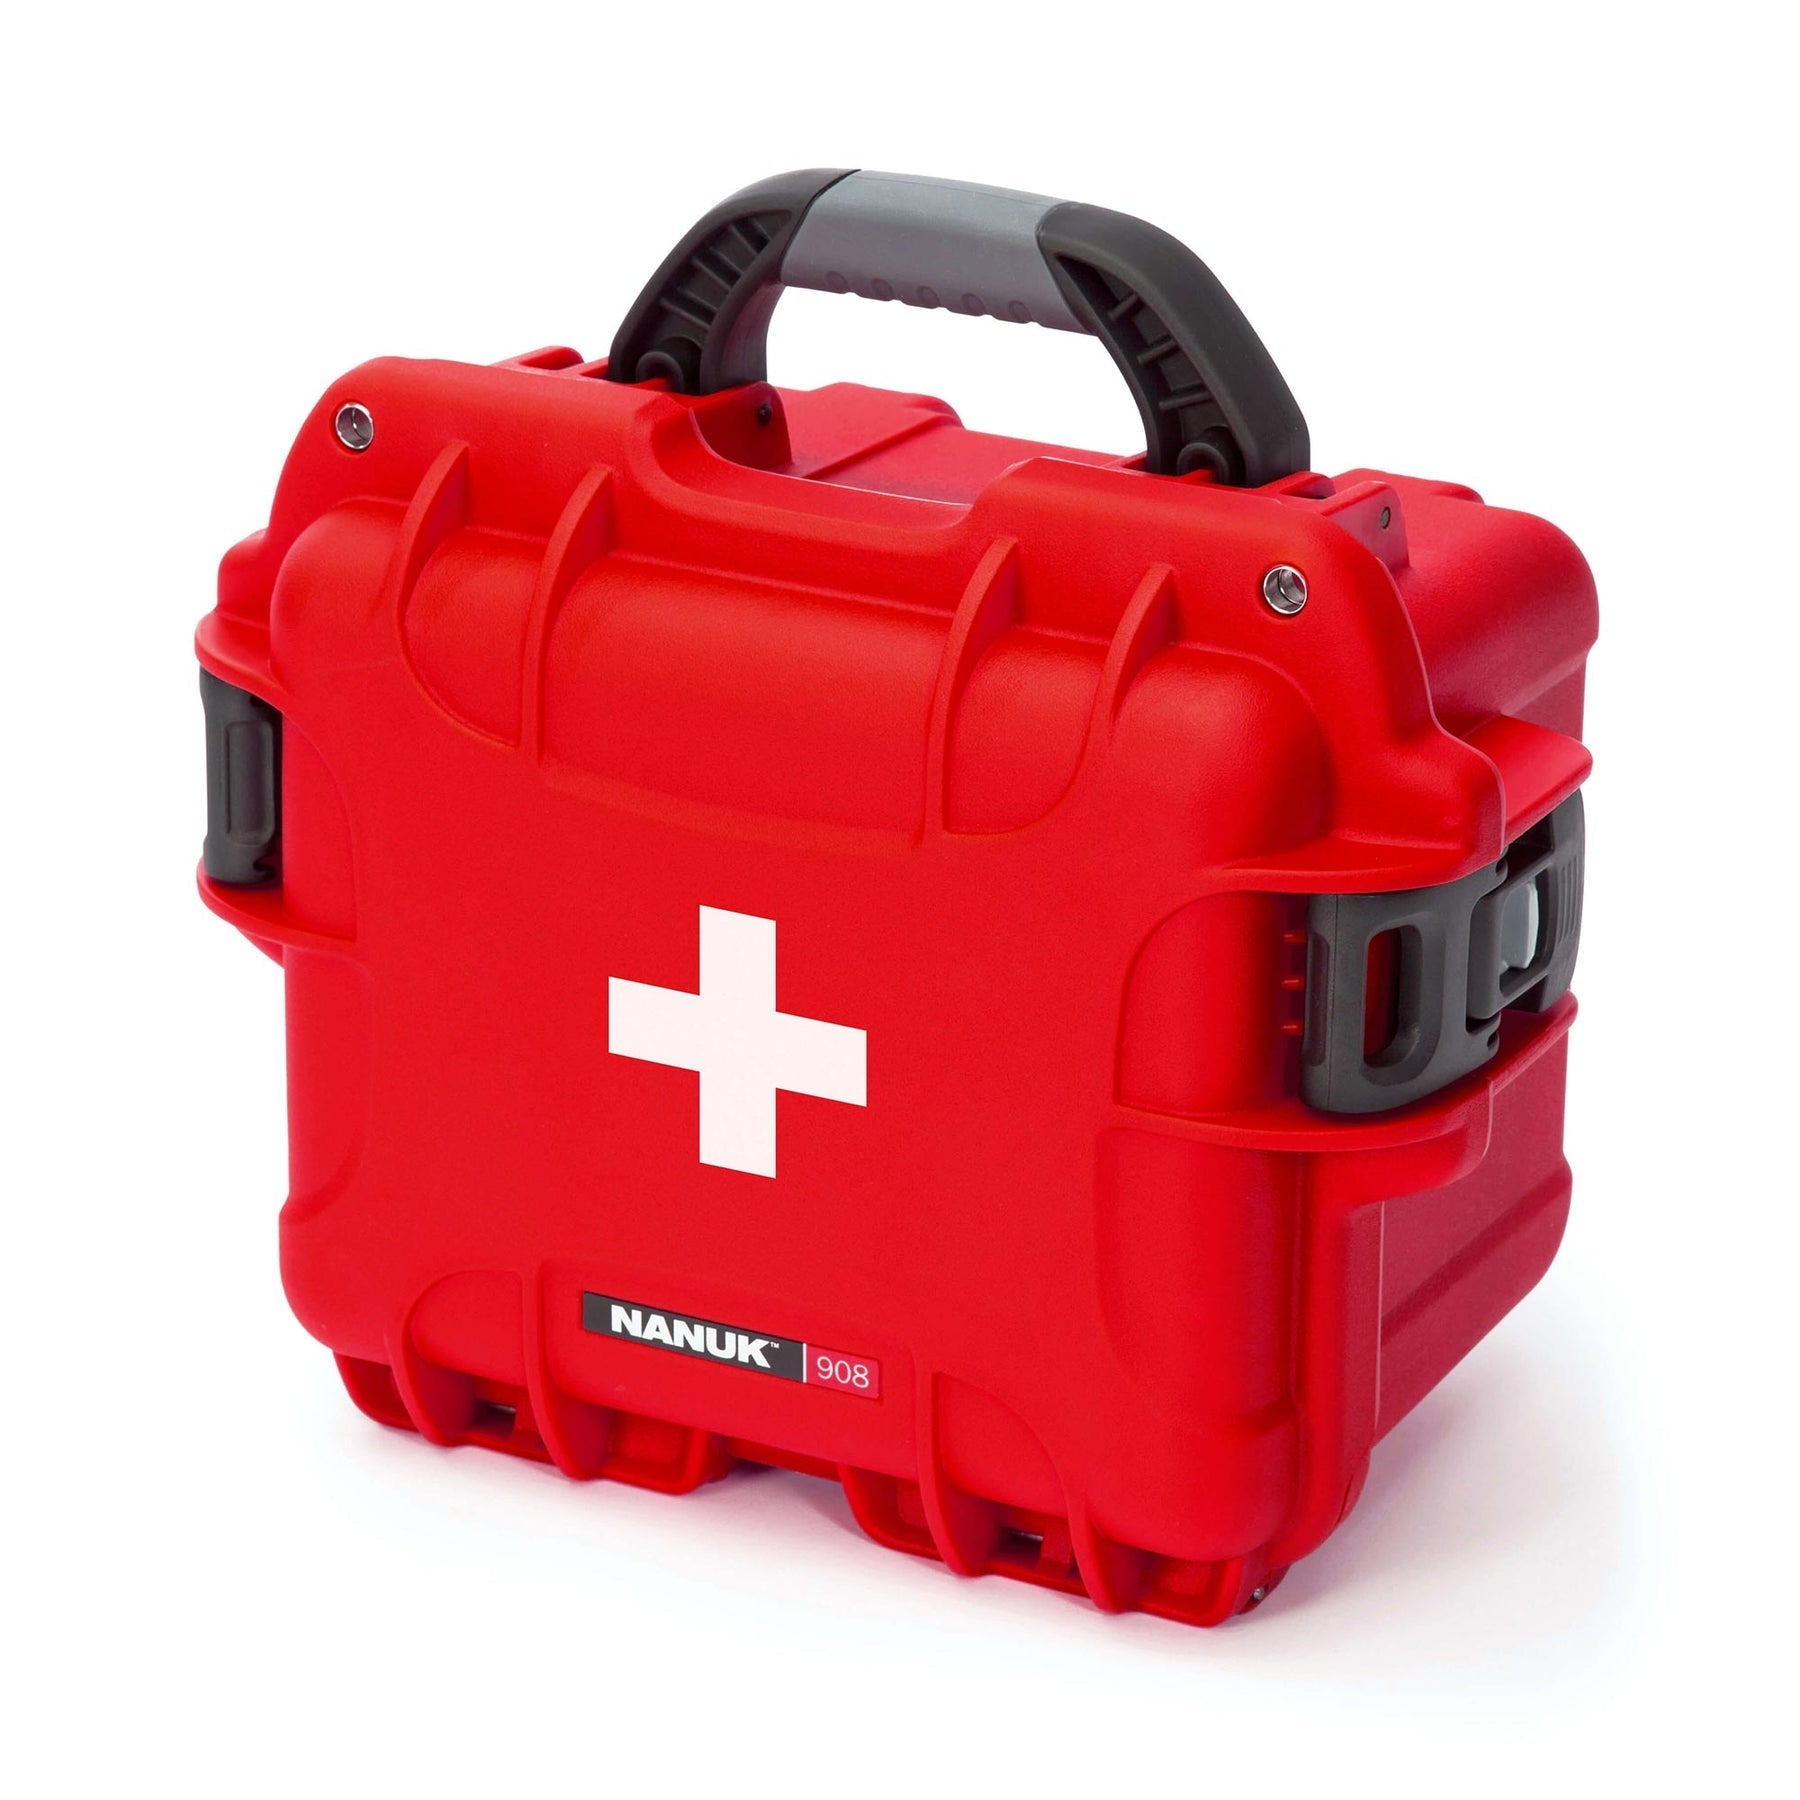 Nanuk 908 First Aid Case